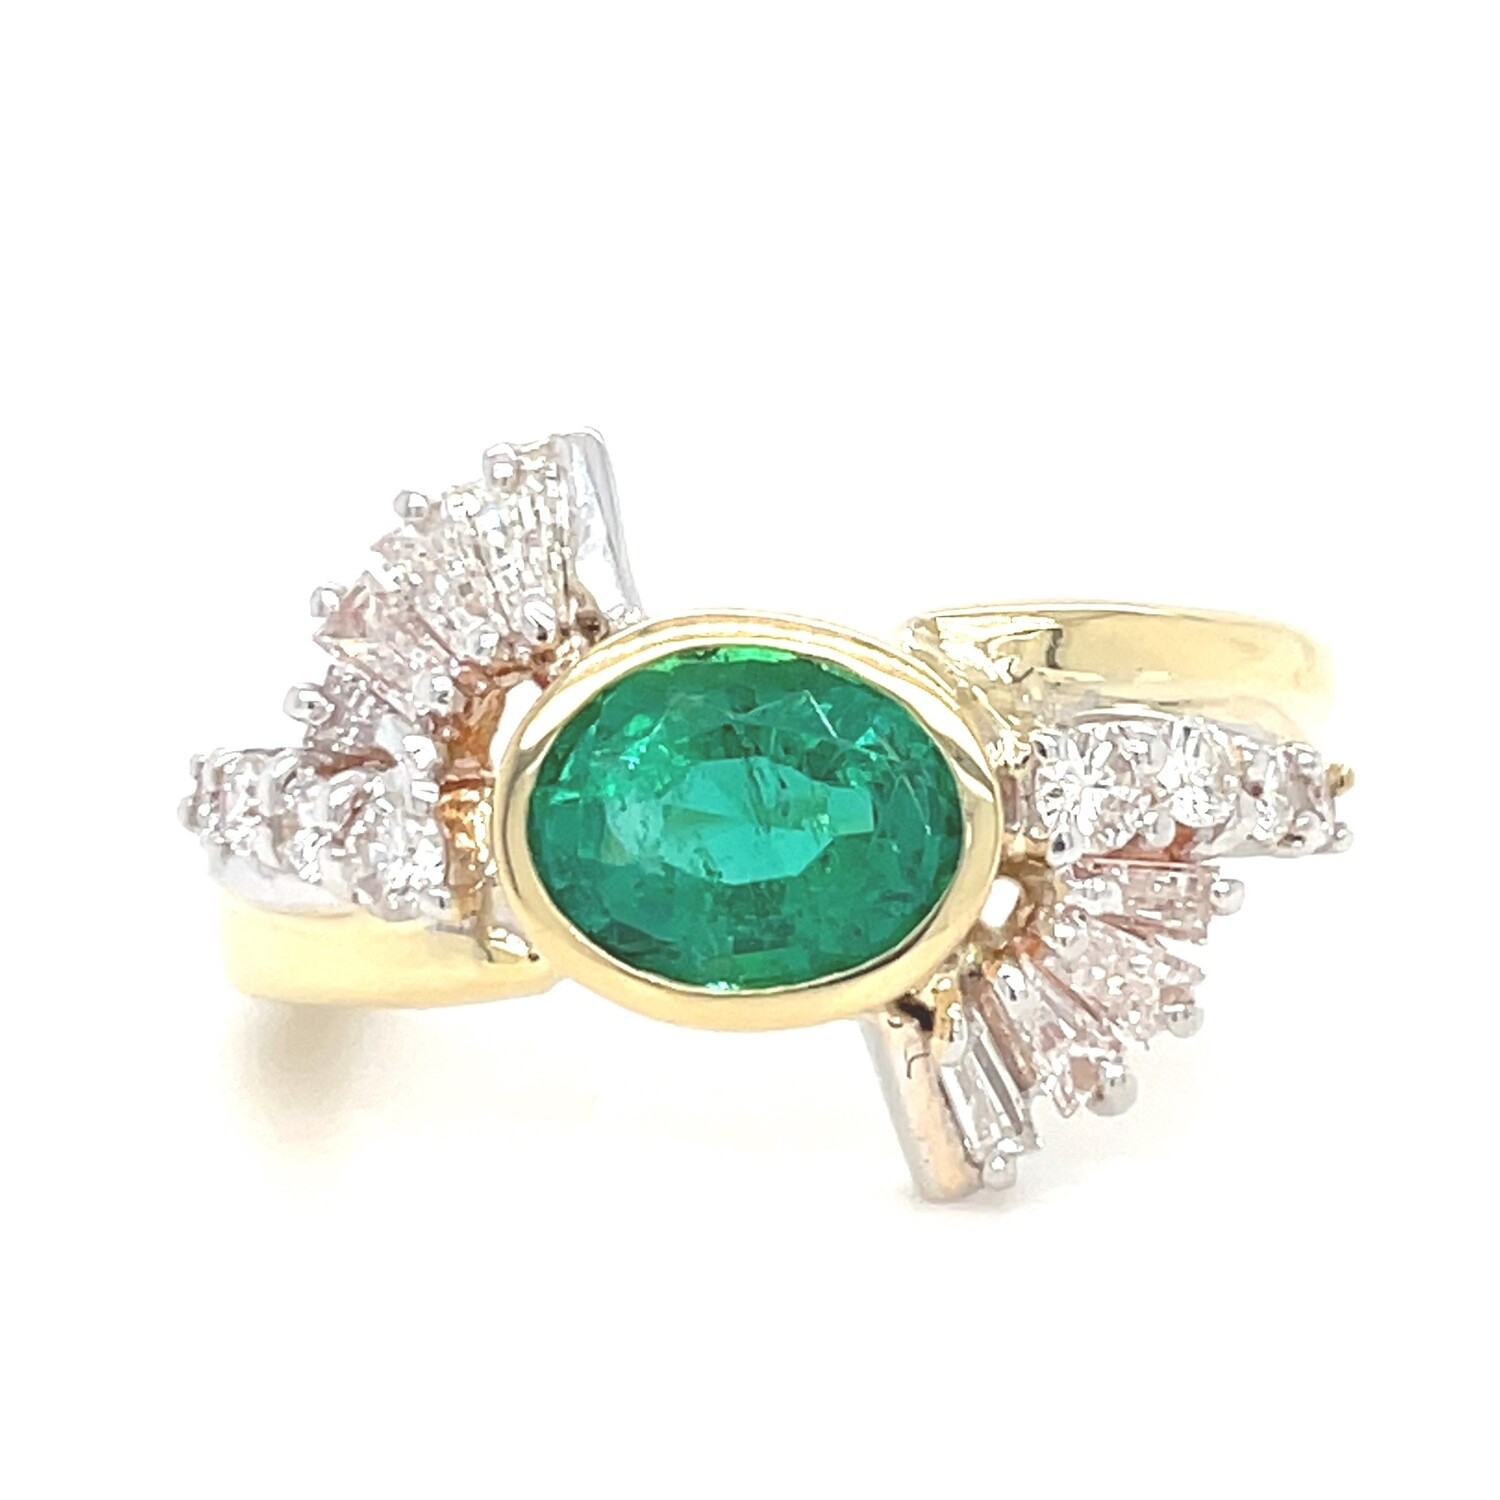 Emerald & Diamond Ring in 18k Yellow Gold